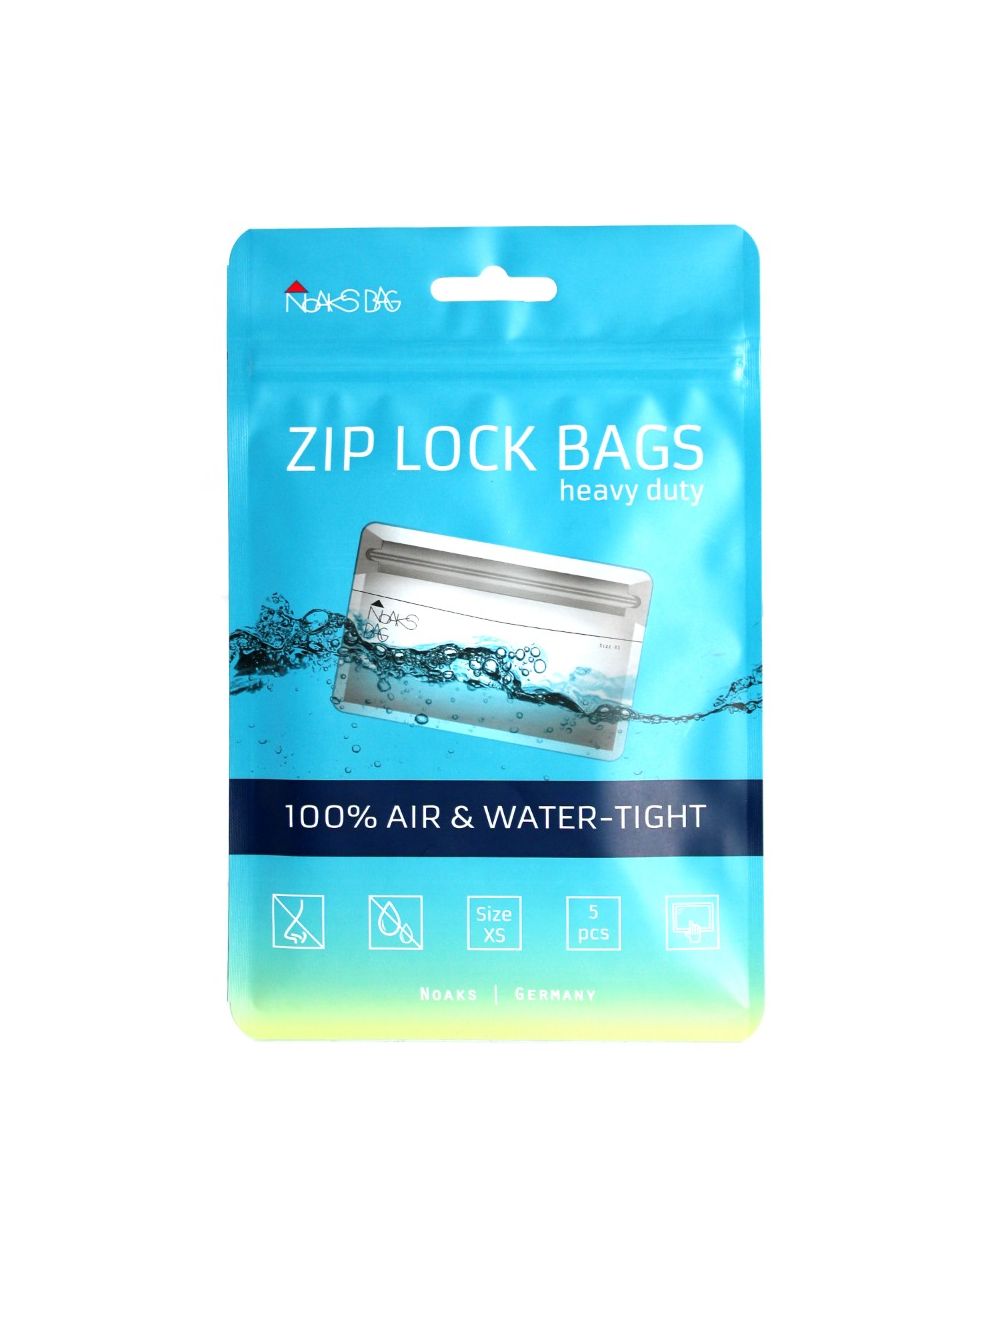 https://www.heisenberg.shop/media/catalog/product/cache/4c4412c9abd20f755f33ba4cf4354d9b/3/9/391091-noaks-zip-lock-bags-size-xs-1200x1800.jpg